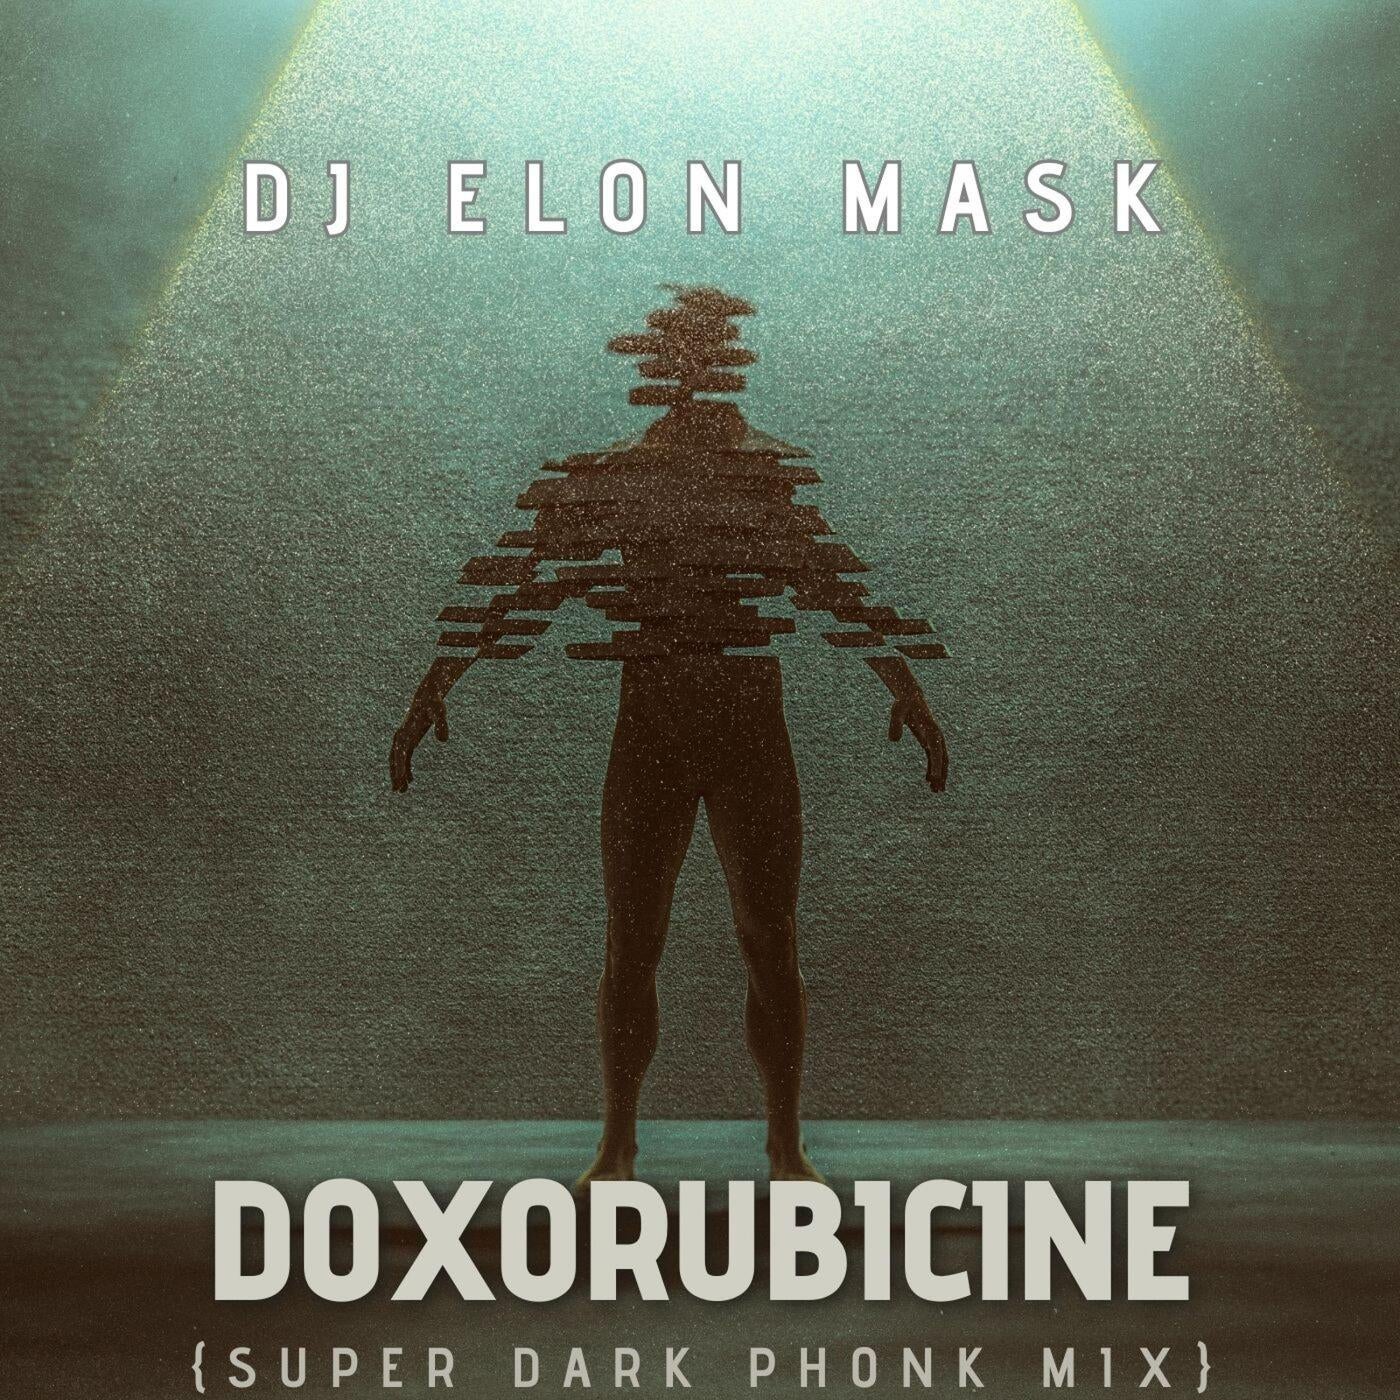 Doxorubicine